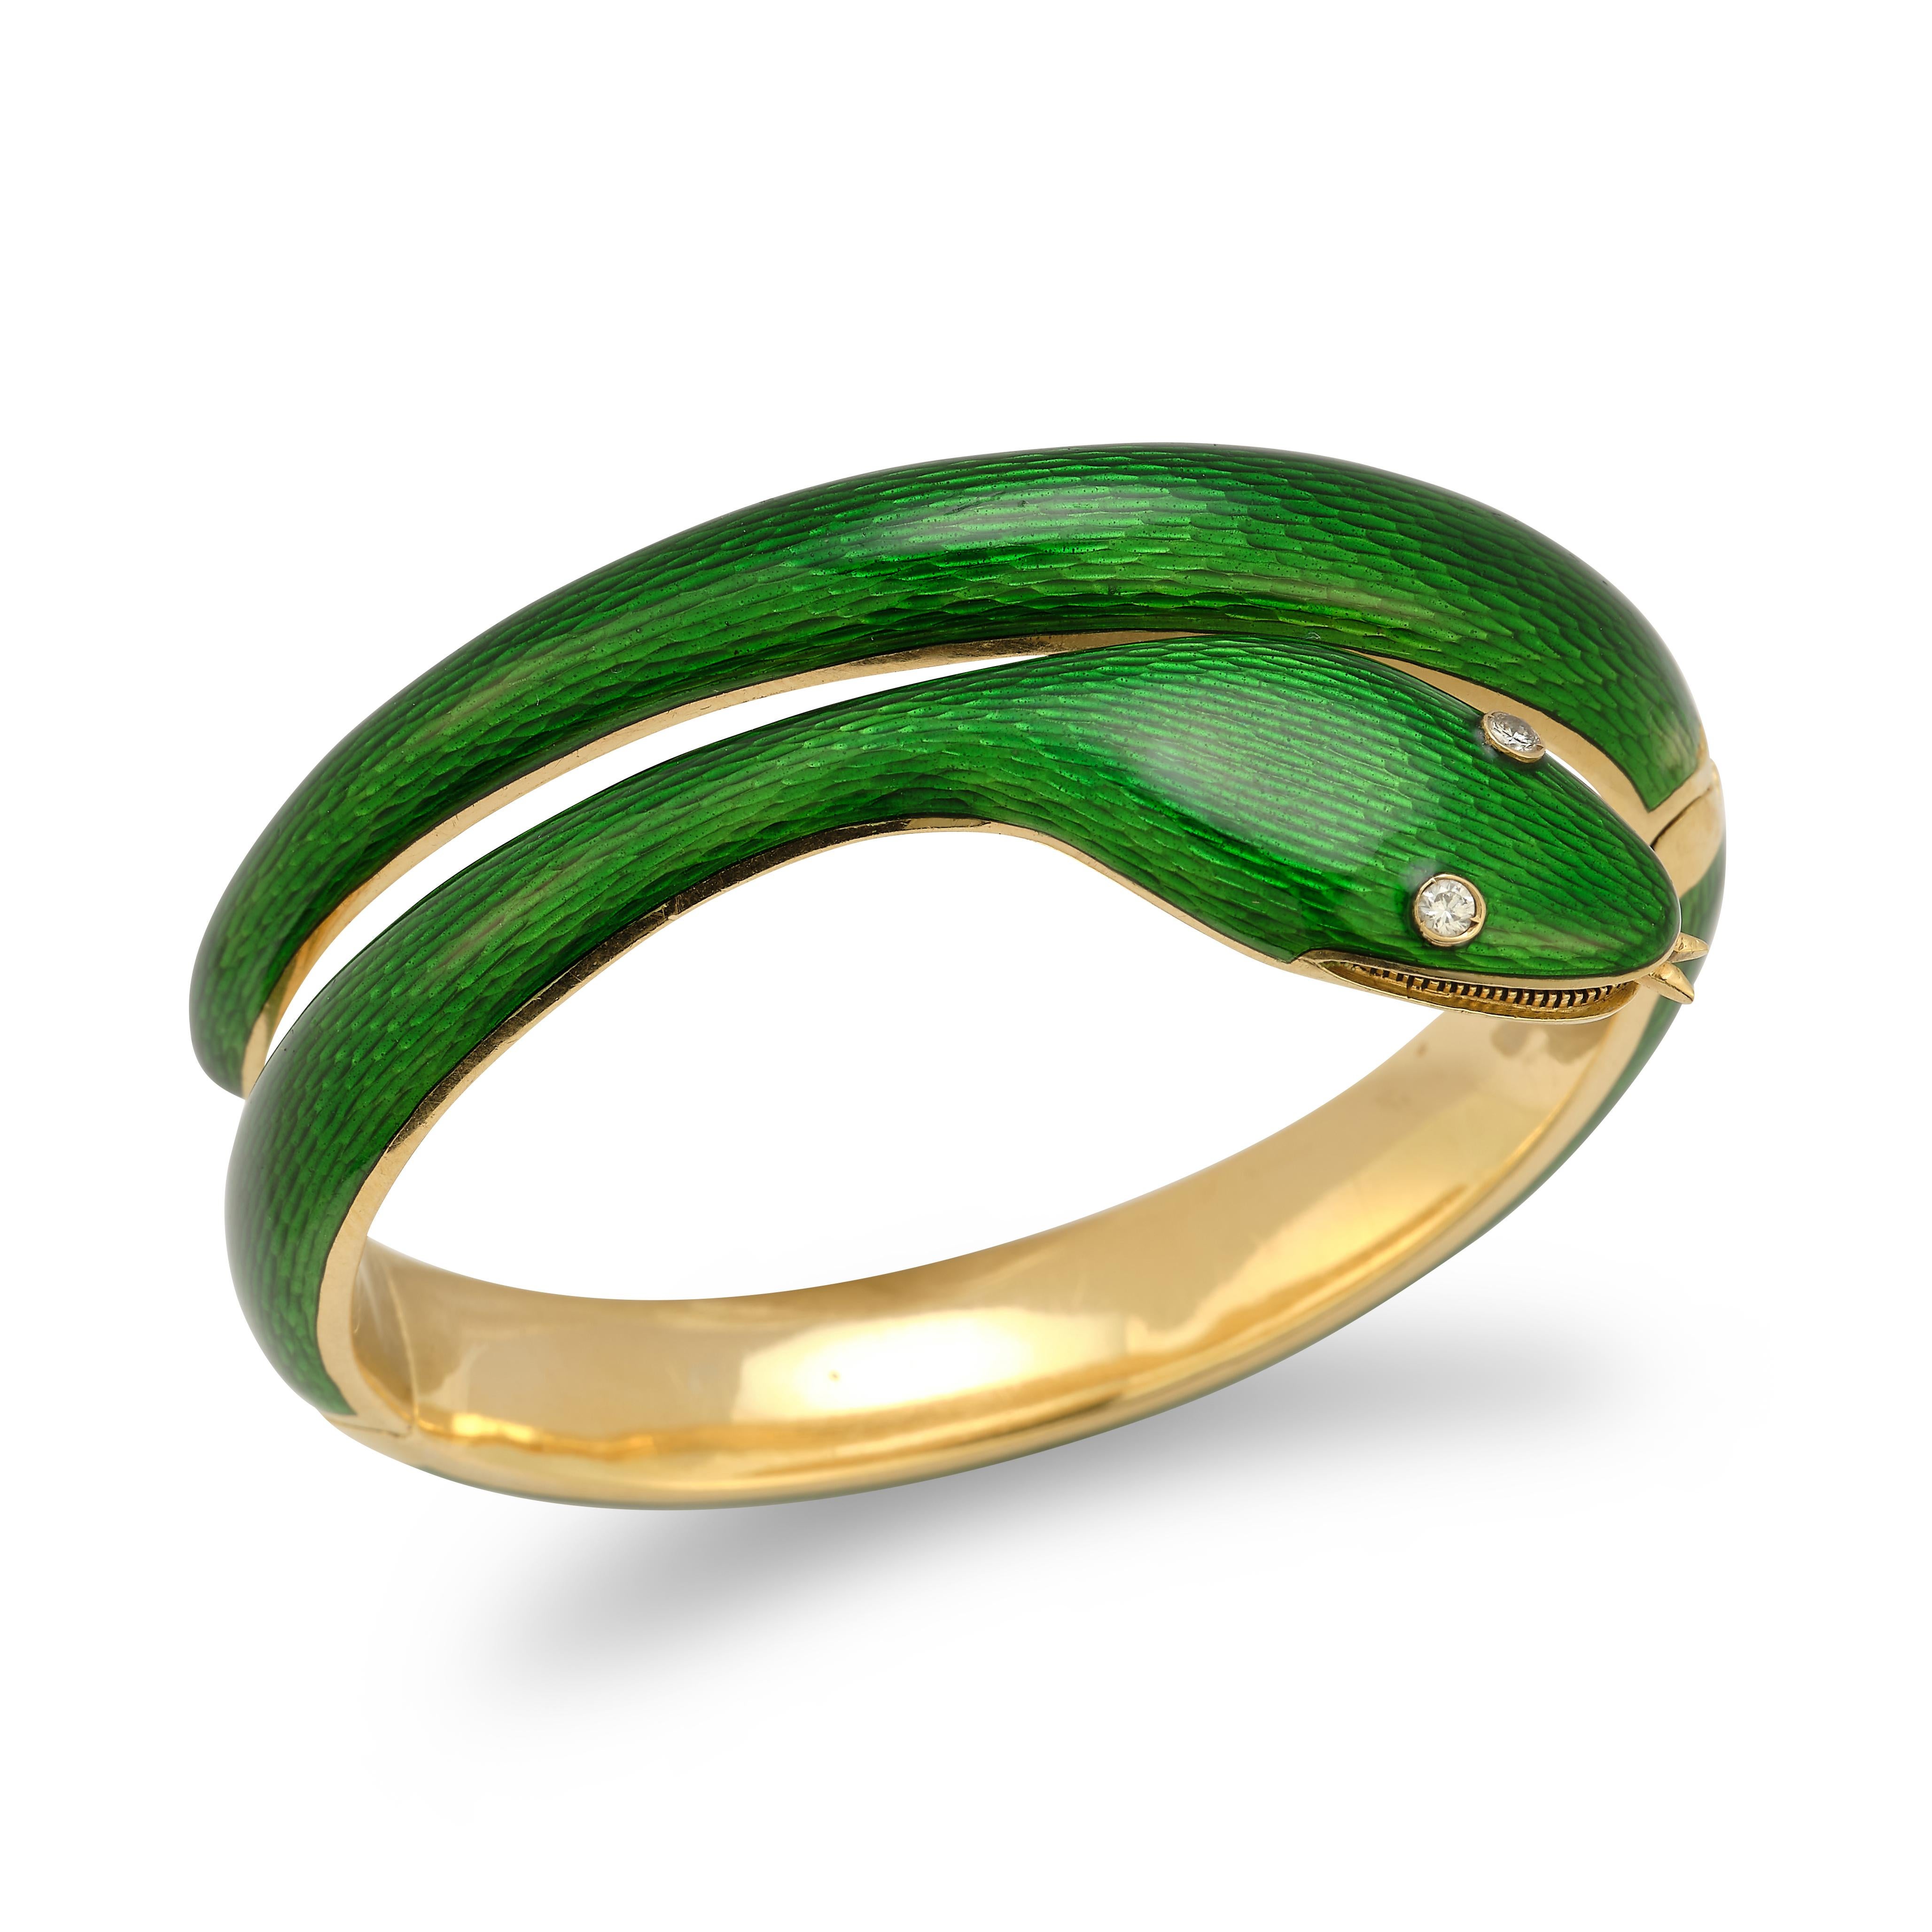 Van Cleef & Arpels Green Enamel Snake Serpenti Bangle

All green enamel bangle & 2 round cut diamonds as snakes eyes set in 18k yellow gold.

Measurements: 2.25